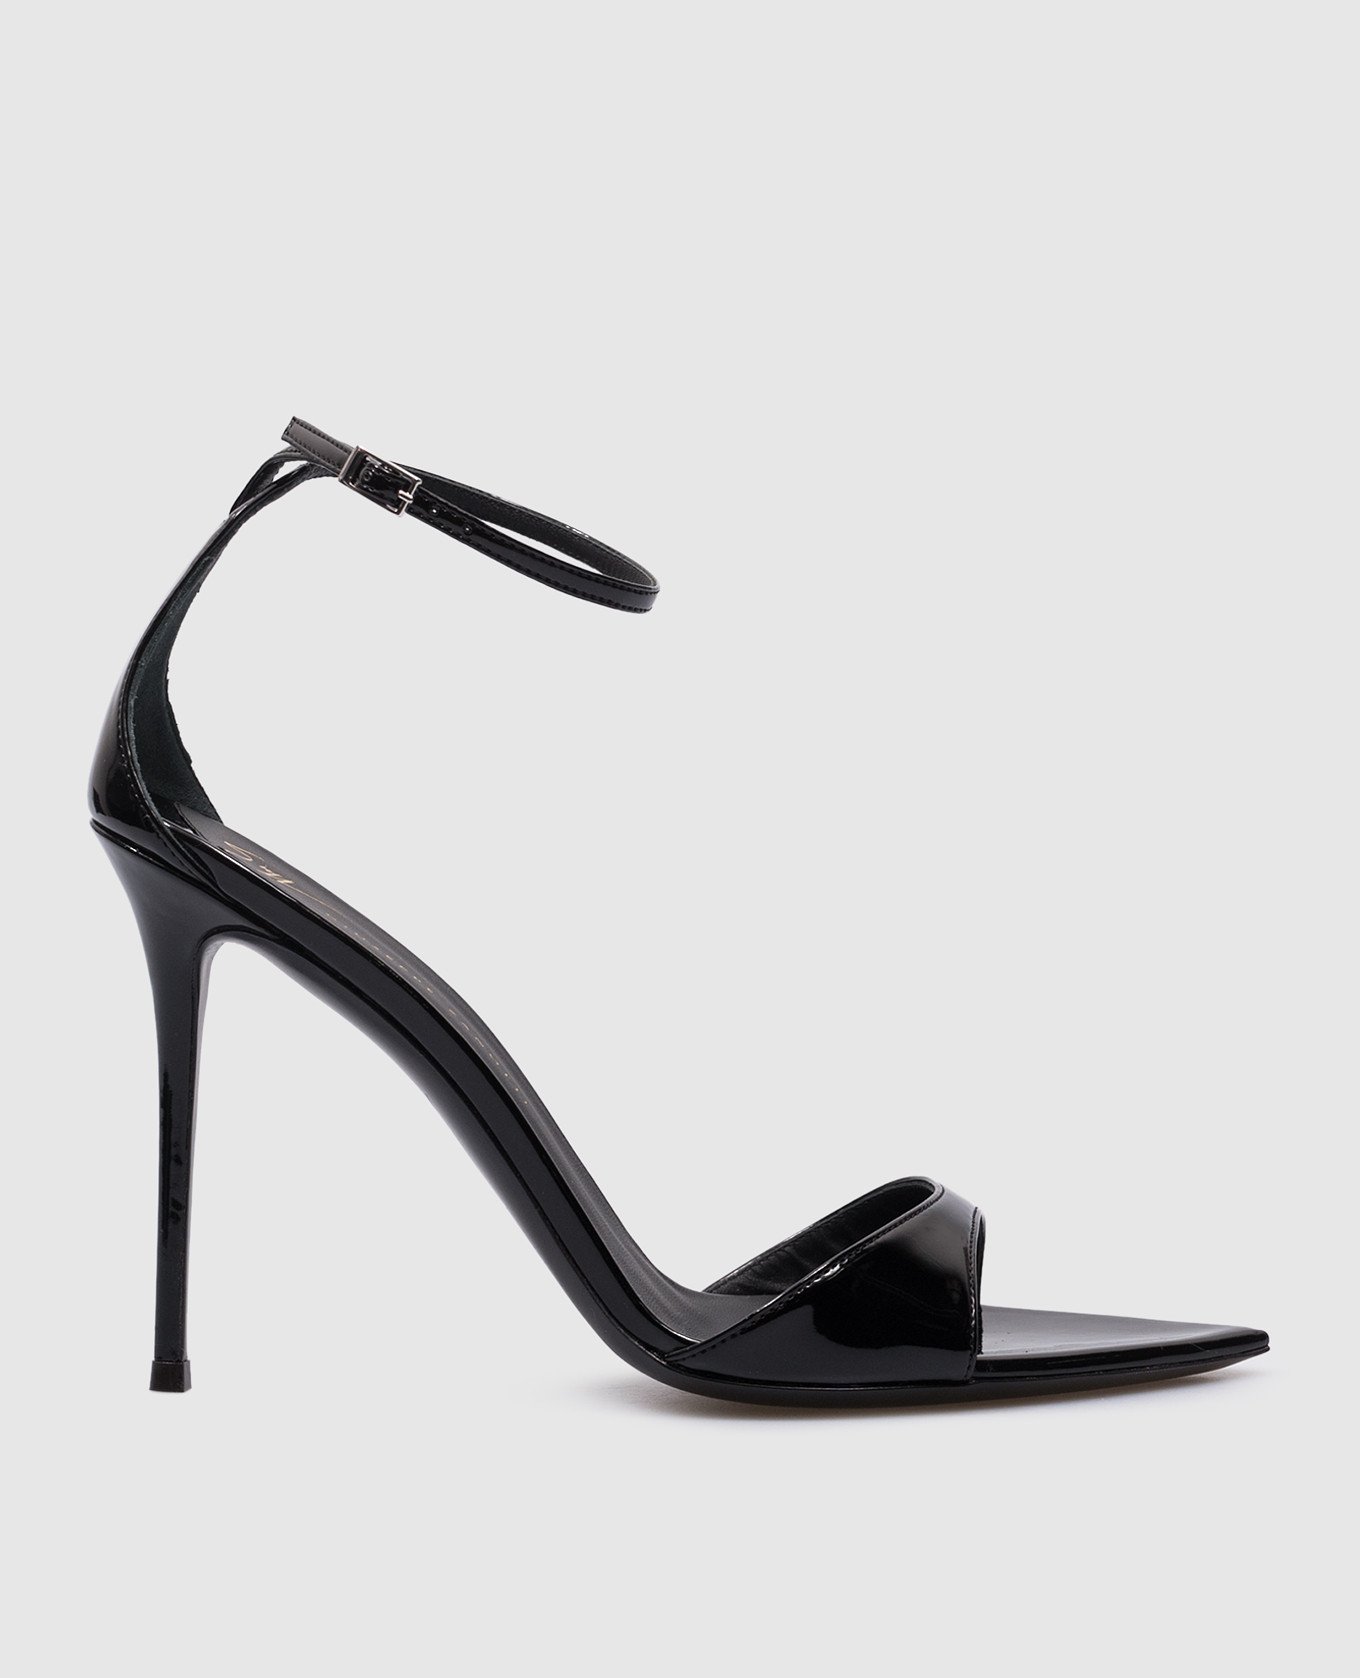 Intrigo black patent leather sandals